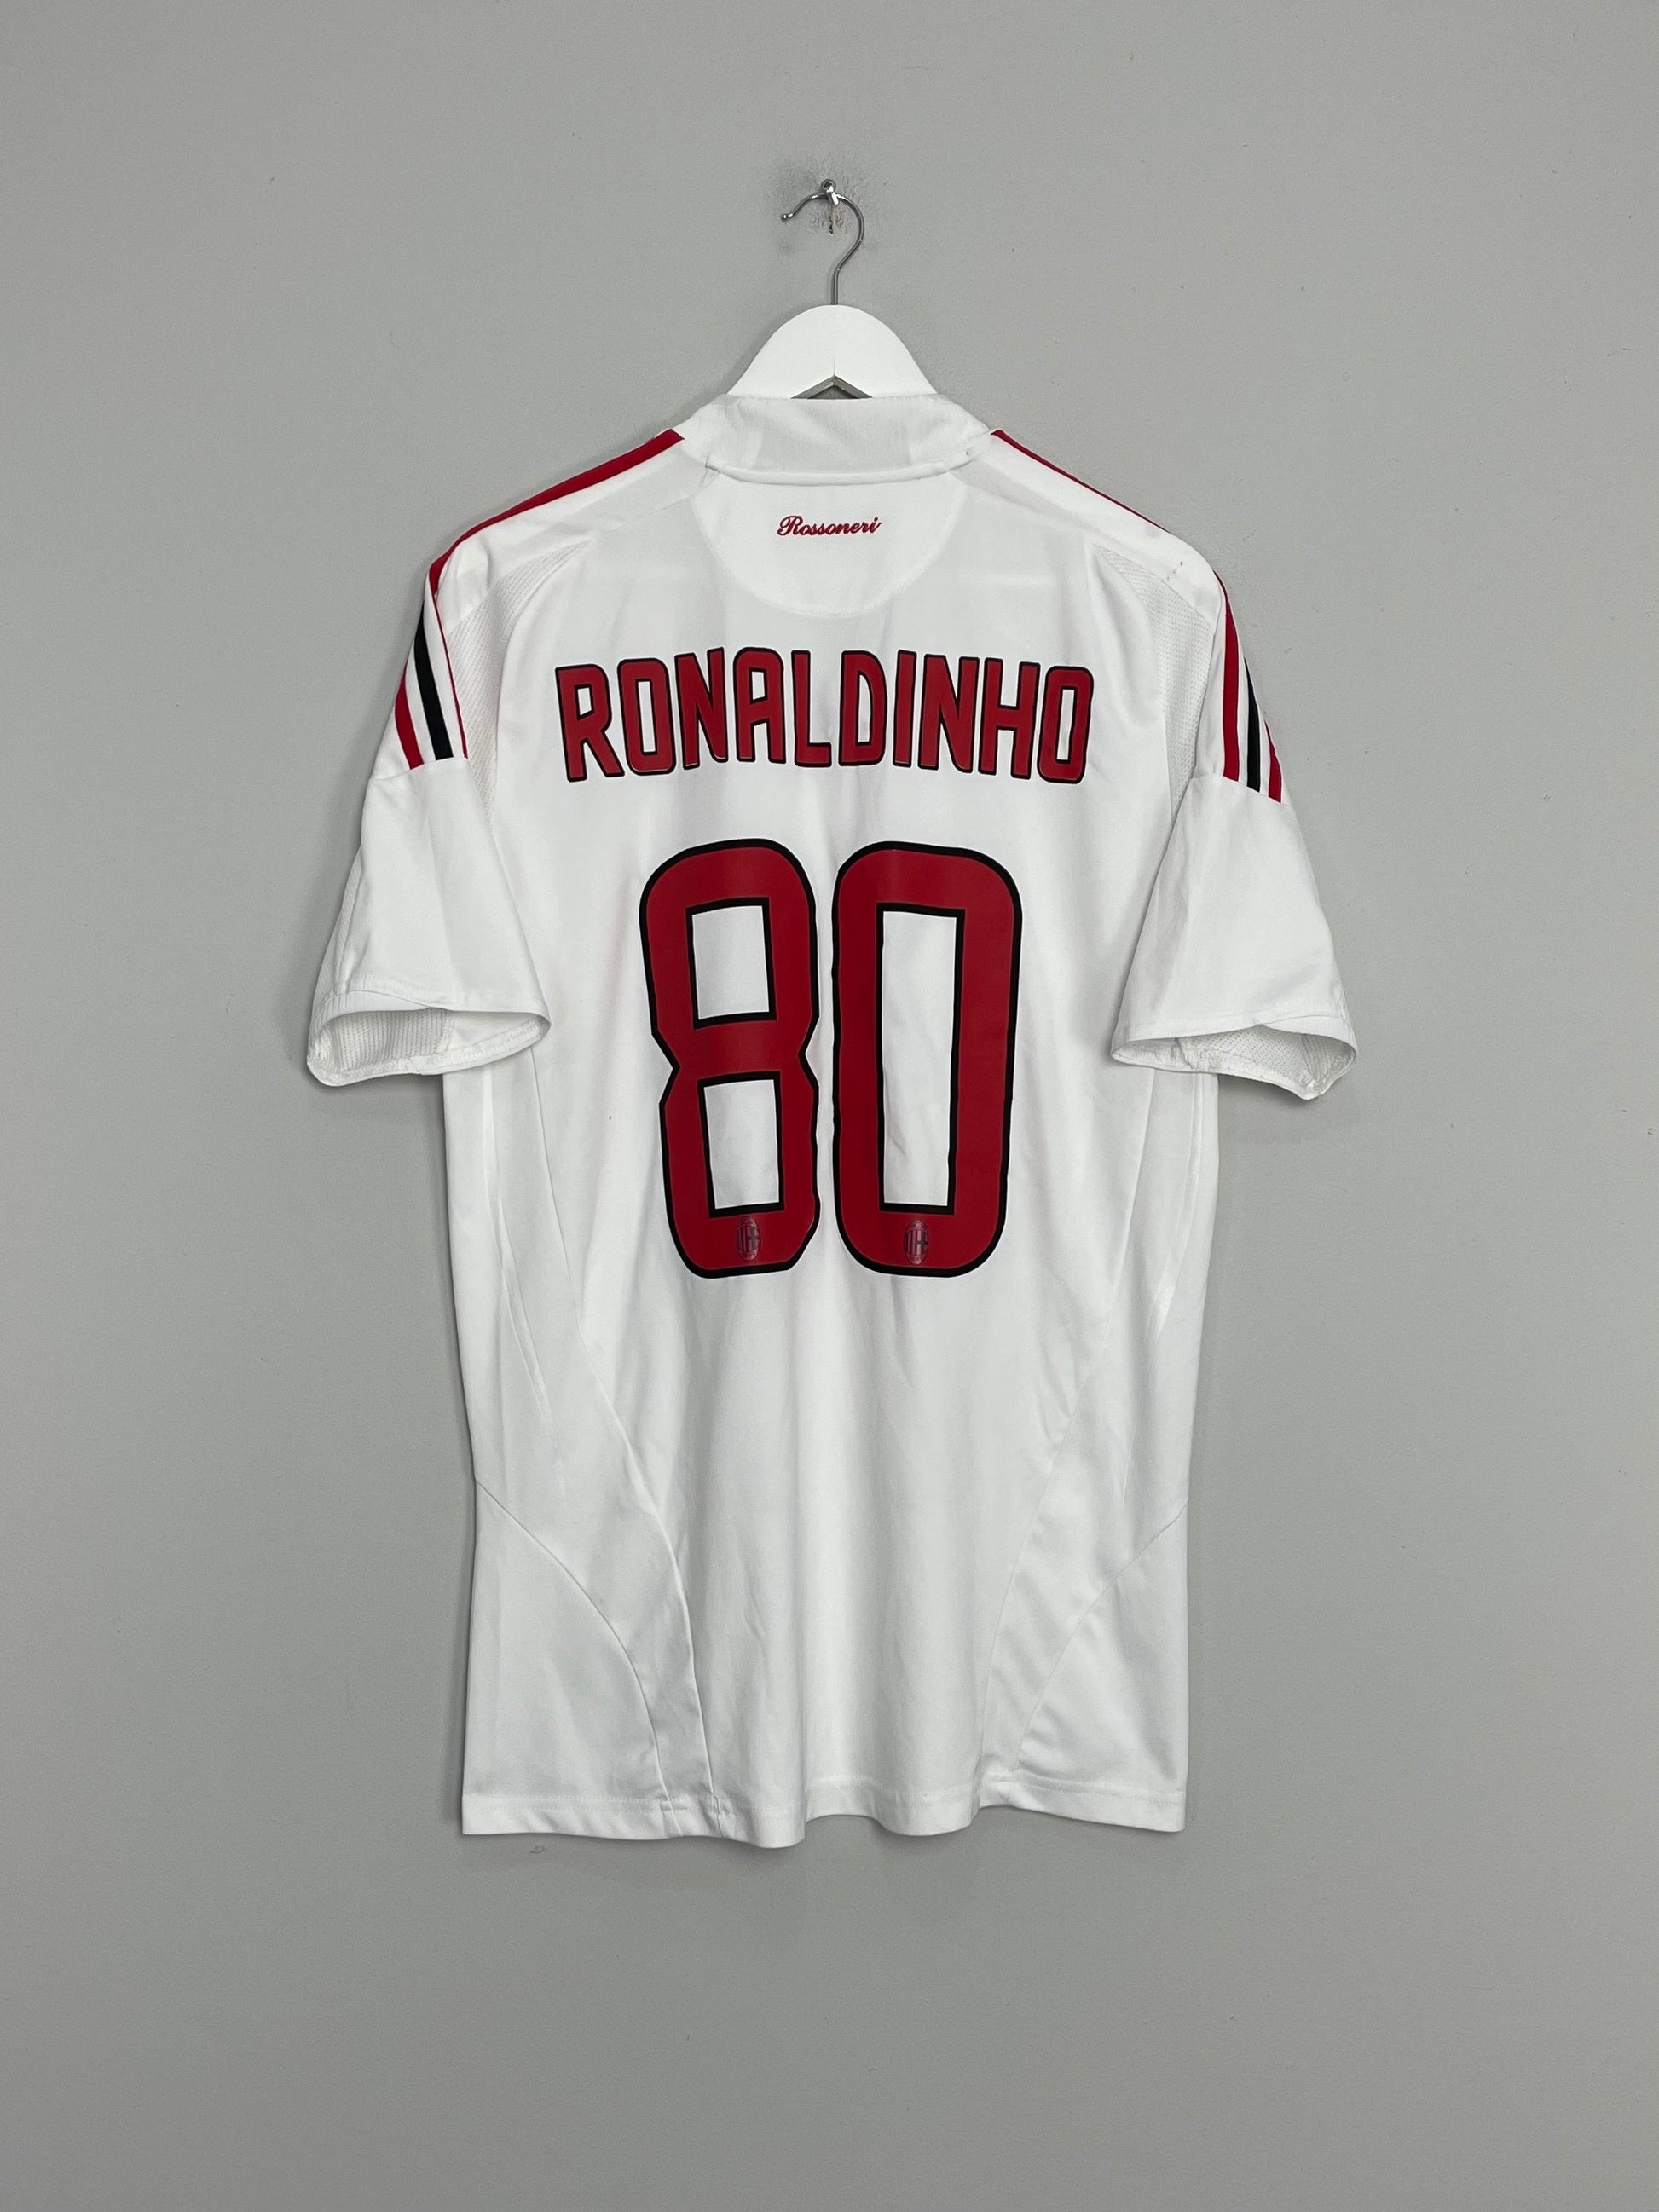 Image of the AC Milan Ronaldinho shirt from the 2008/09 season